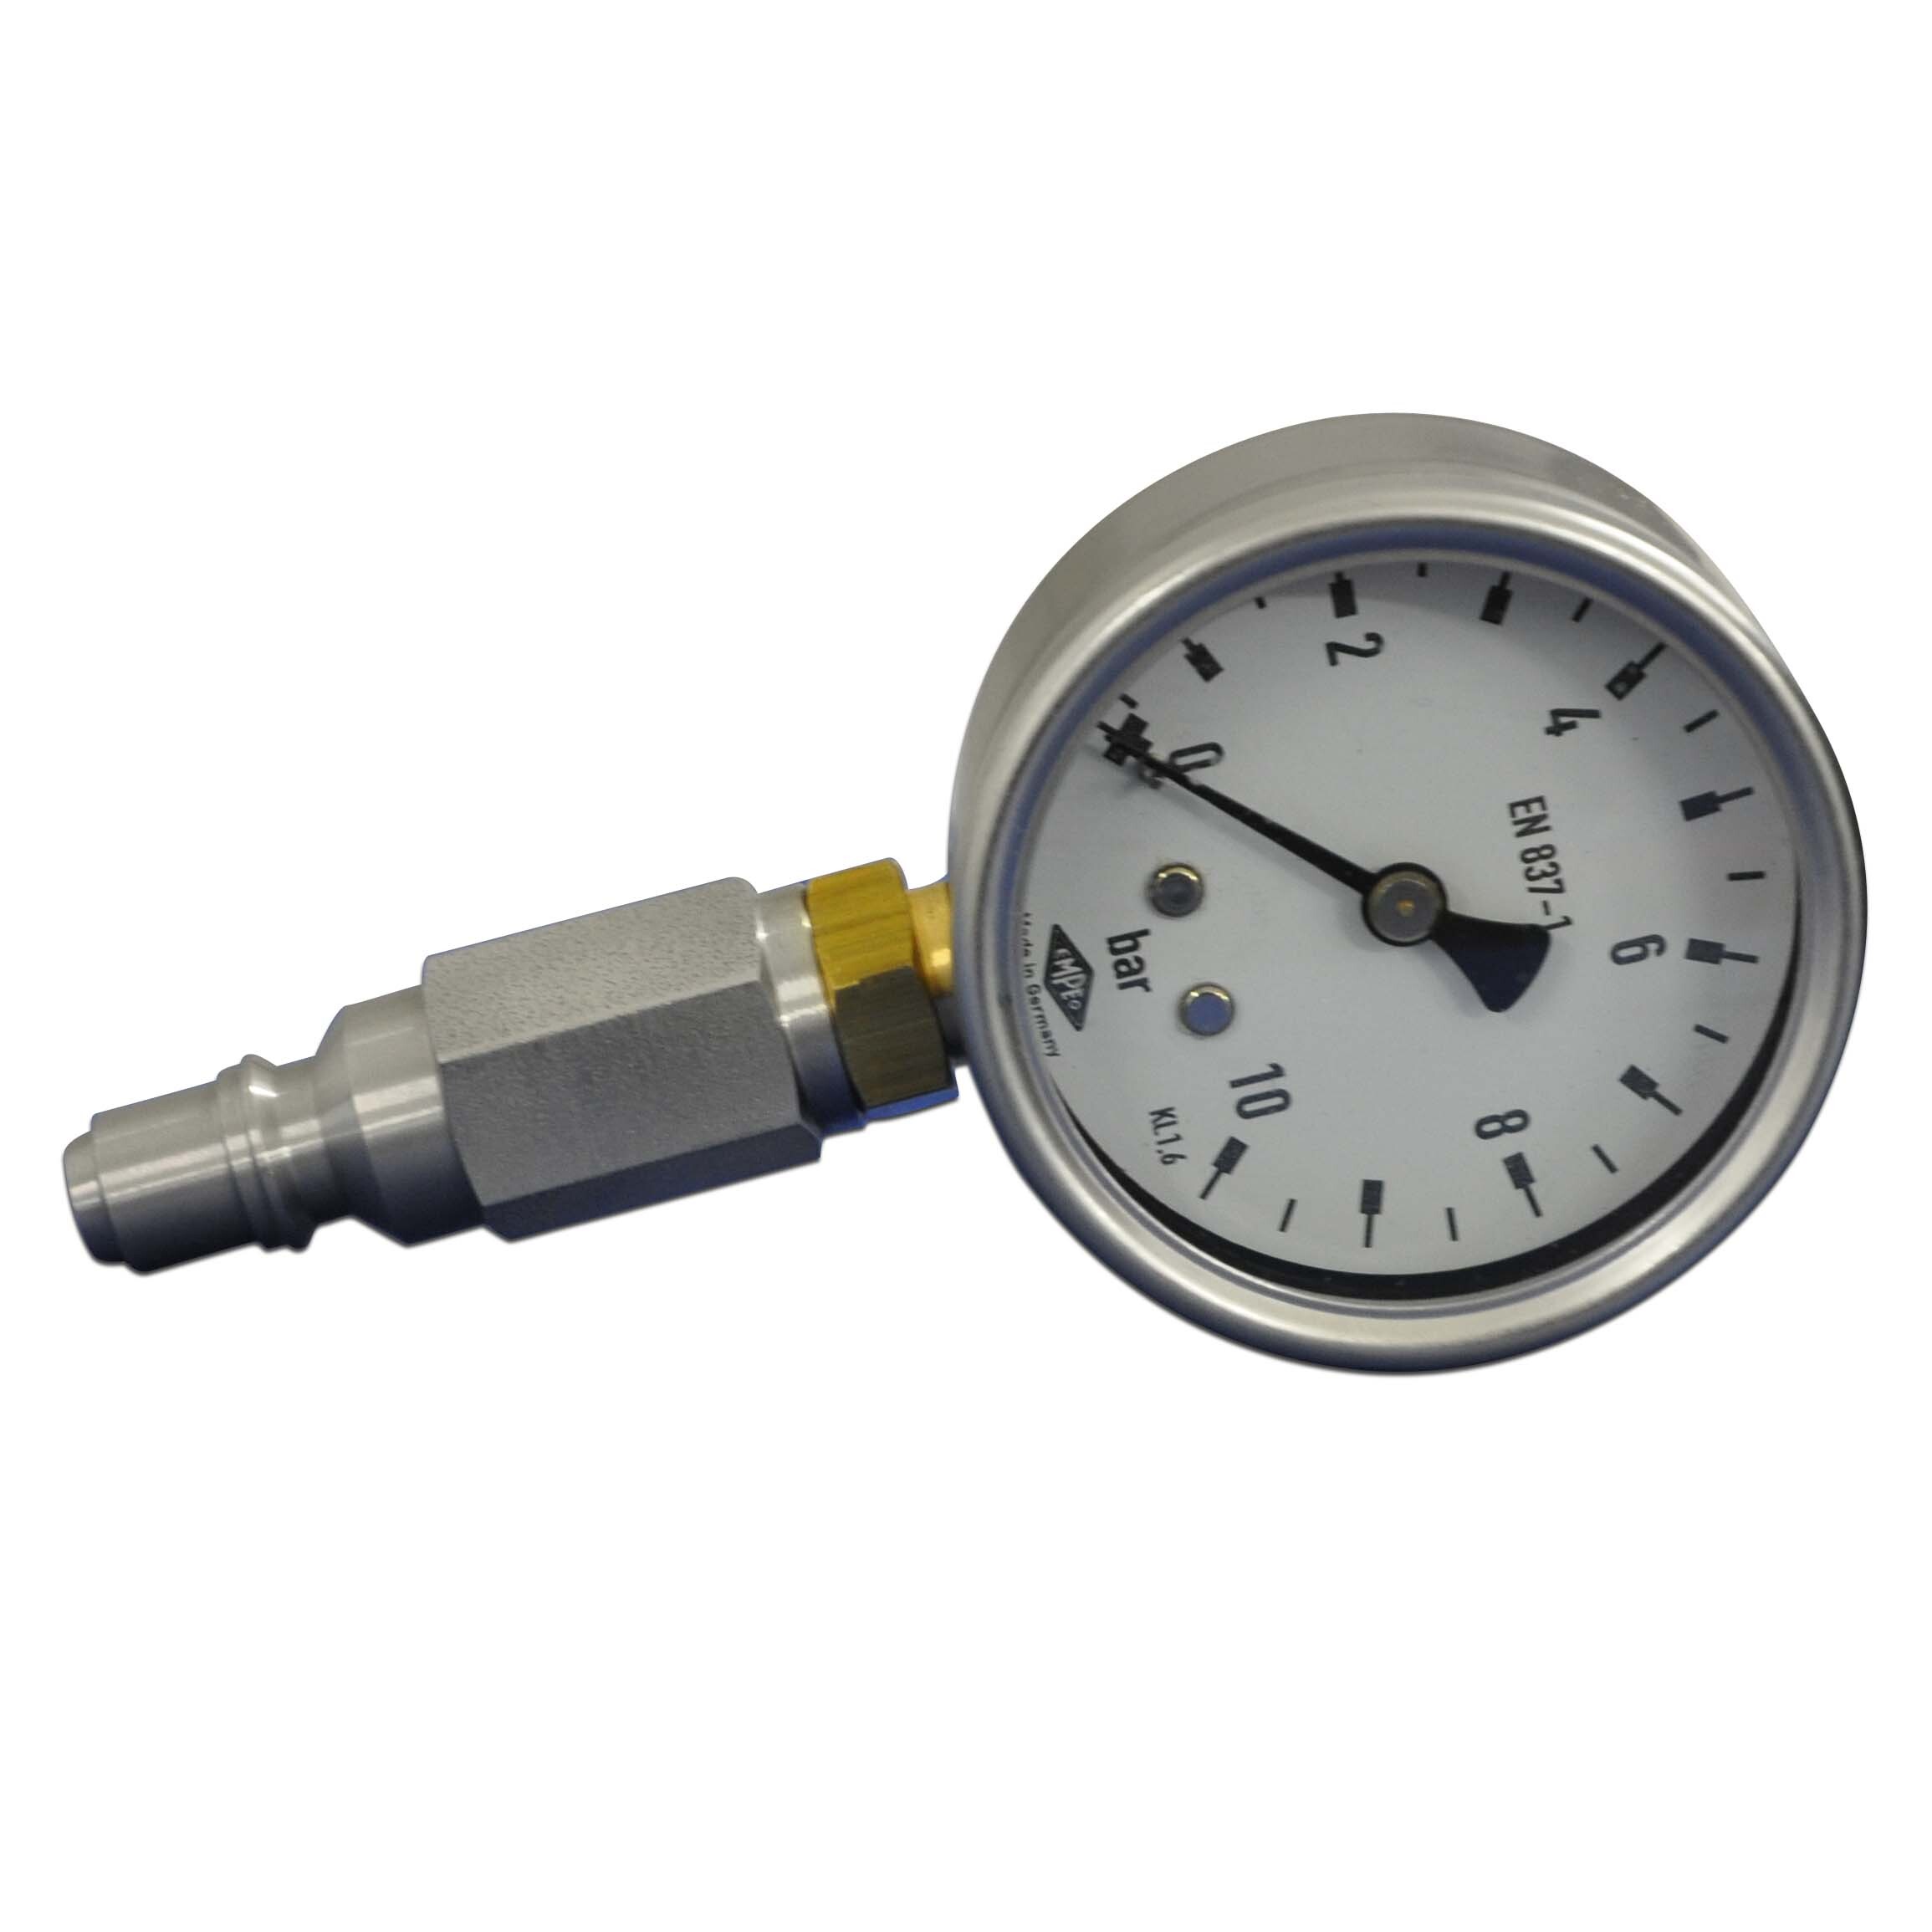 Pressure gauge 0 to 10 bar - class 1,6